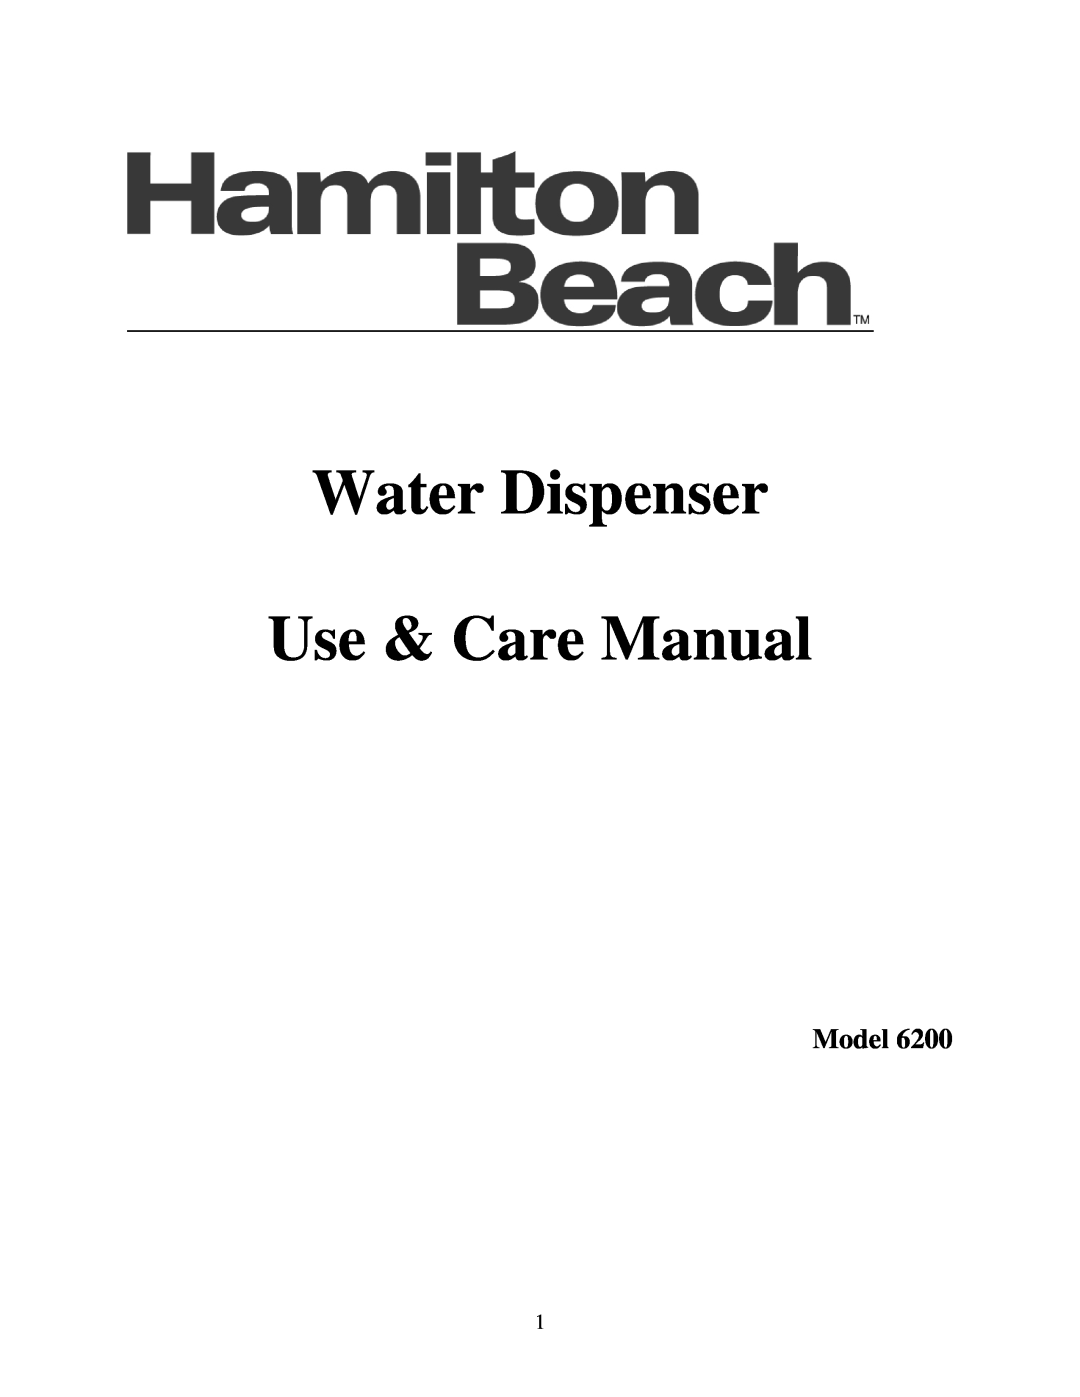 Hamilton Beach 6200 manual Model, Water Dispenser Use & Care Manual 